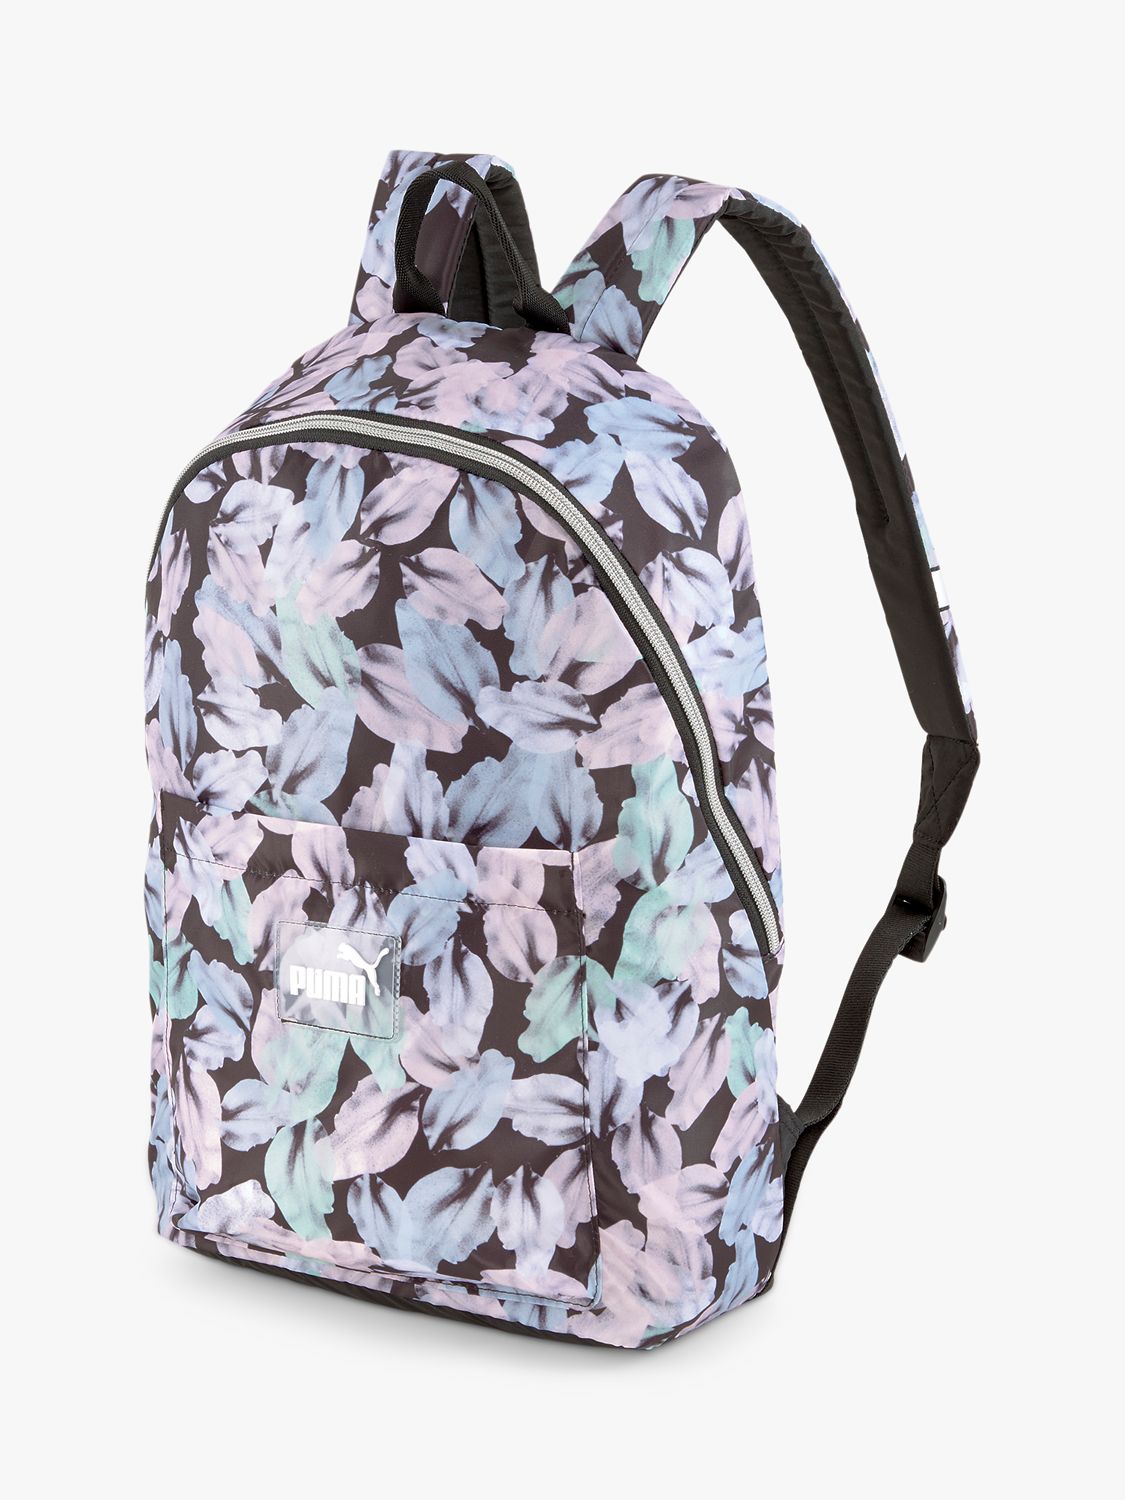 puma backpack floral